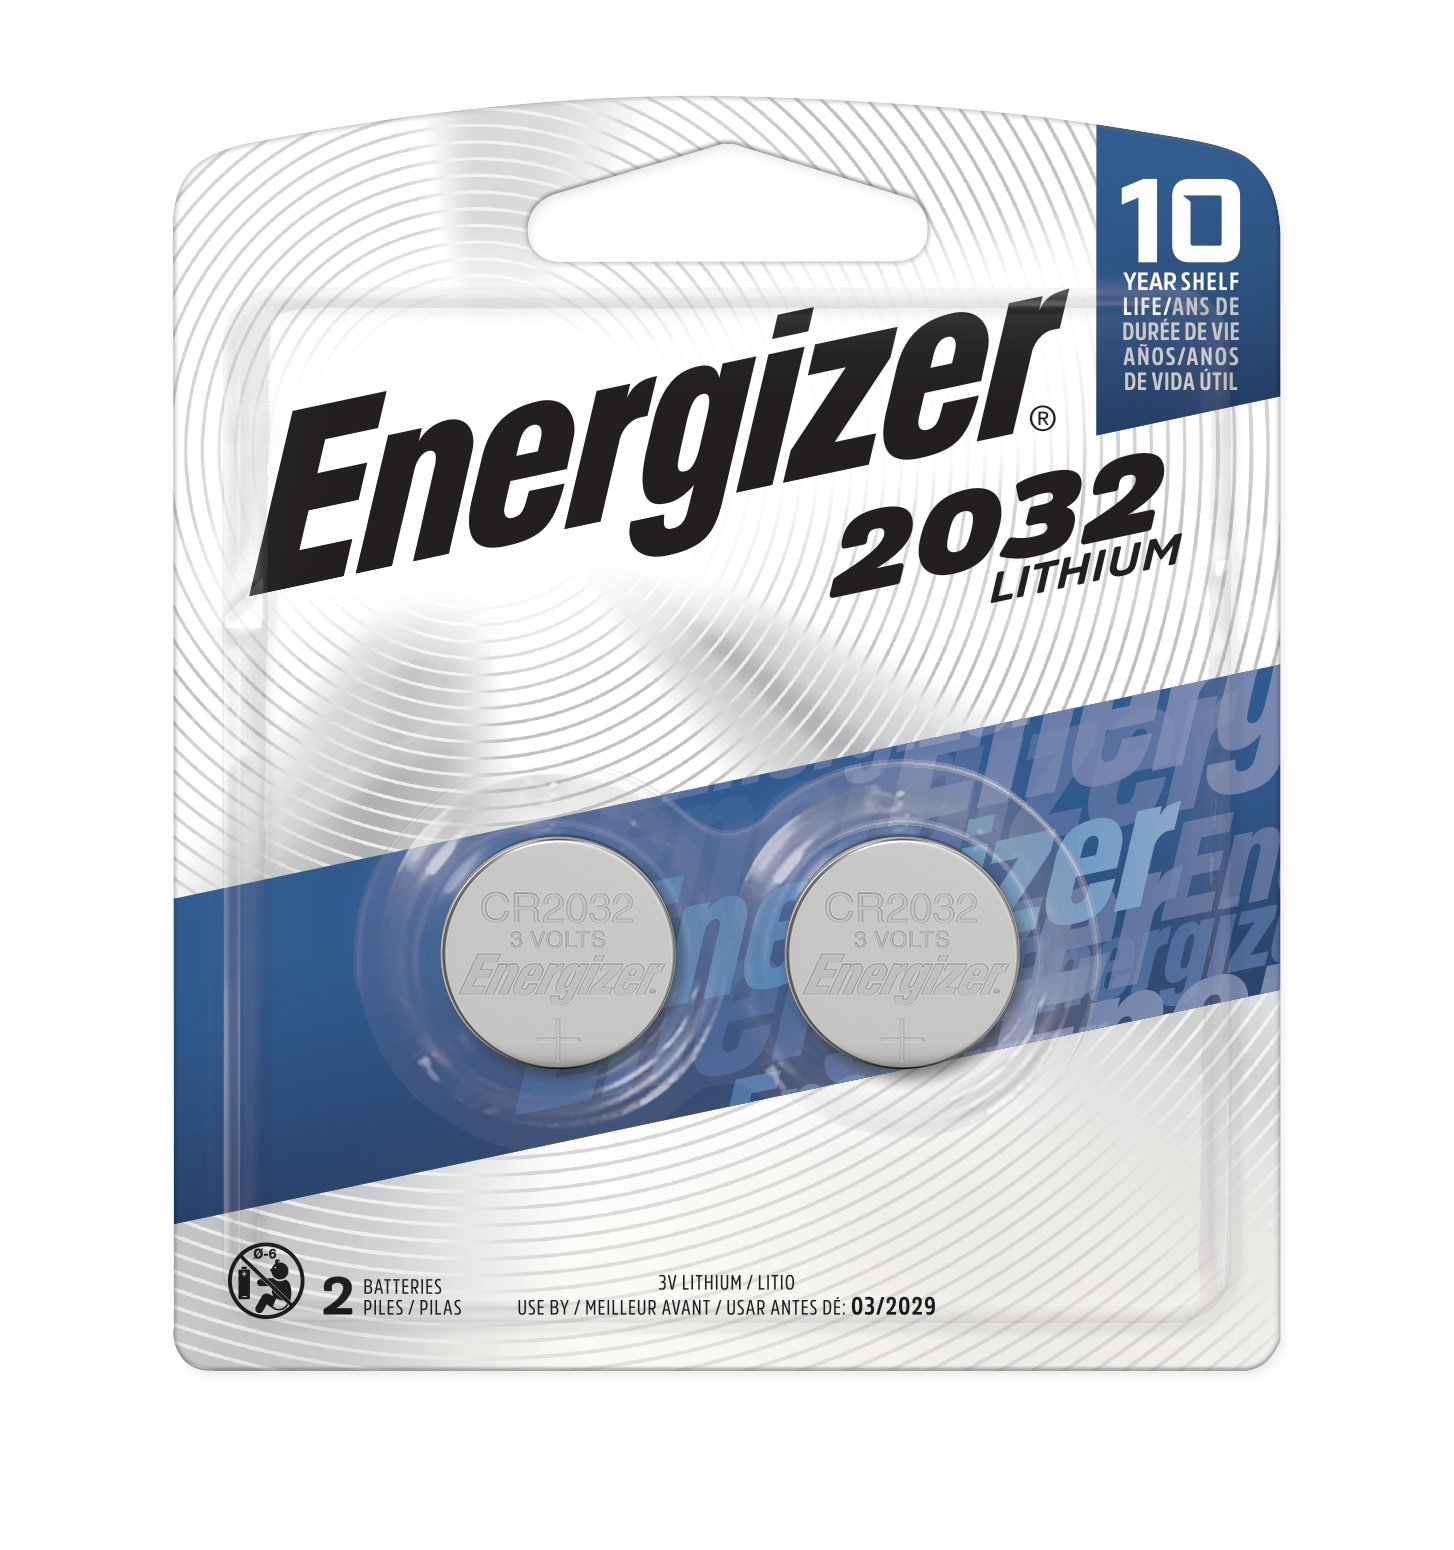 slide 1 of 7, Energizer Watchelectronic 3v 2032 Batteries, 2 ct